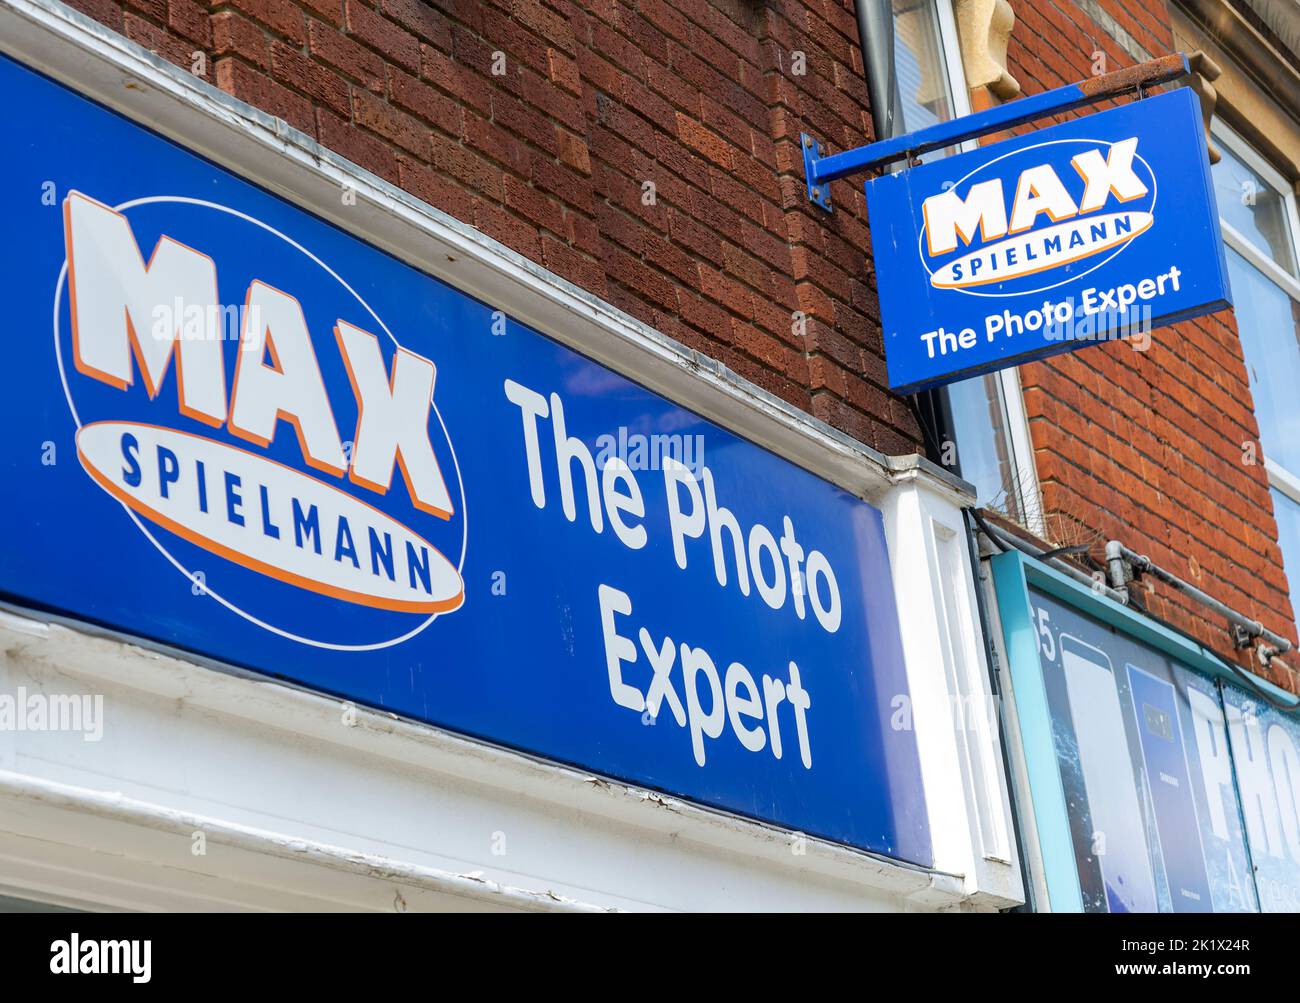 Max Spielmann la foto experto tienda de carteles, Felixstowe, Suffolk, Inglaterra, Reino Unido Foto de stock